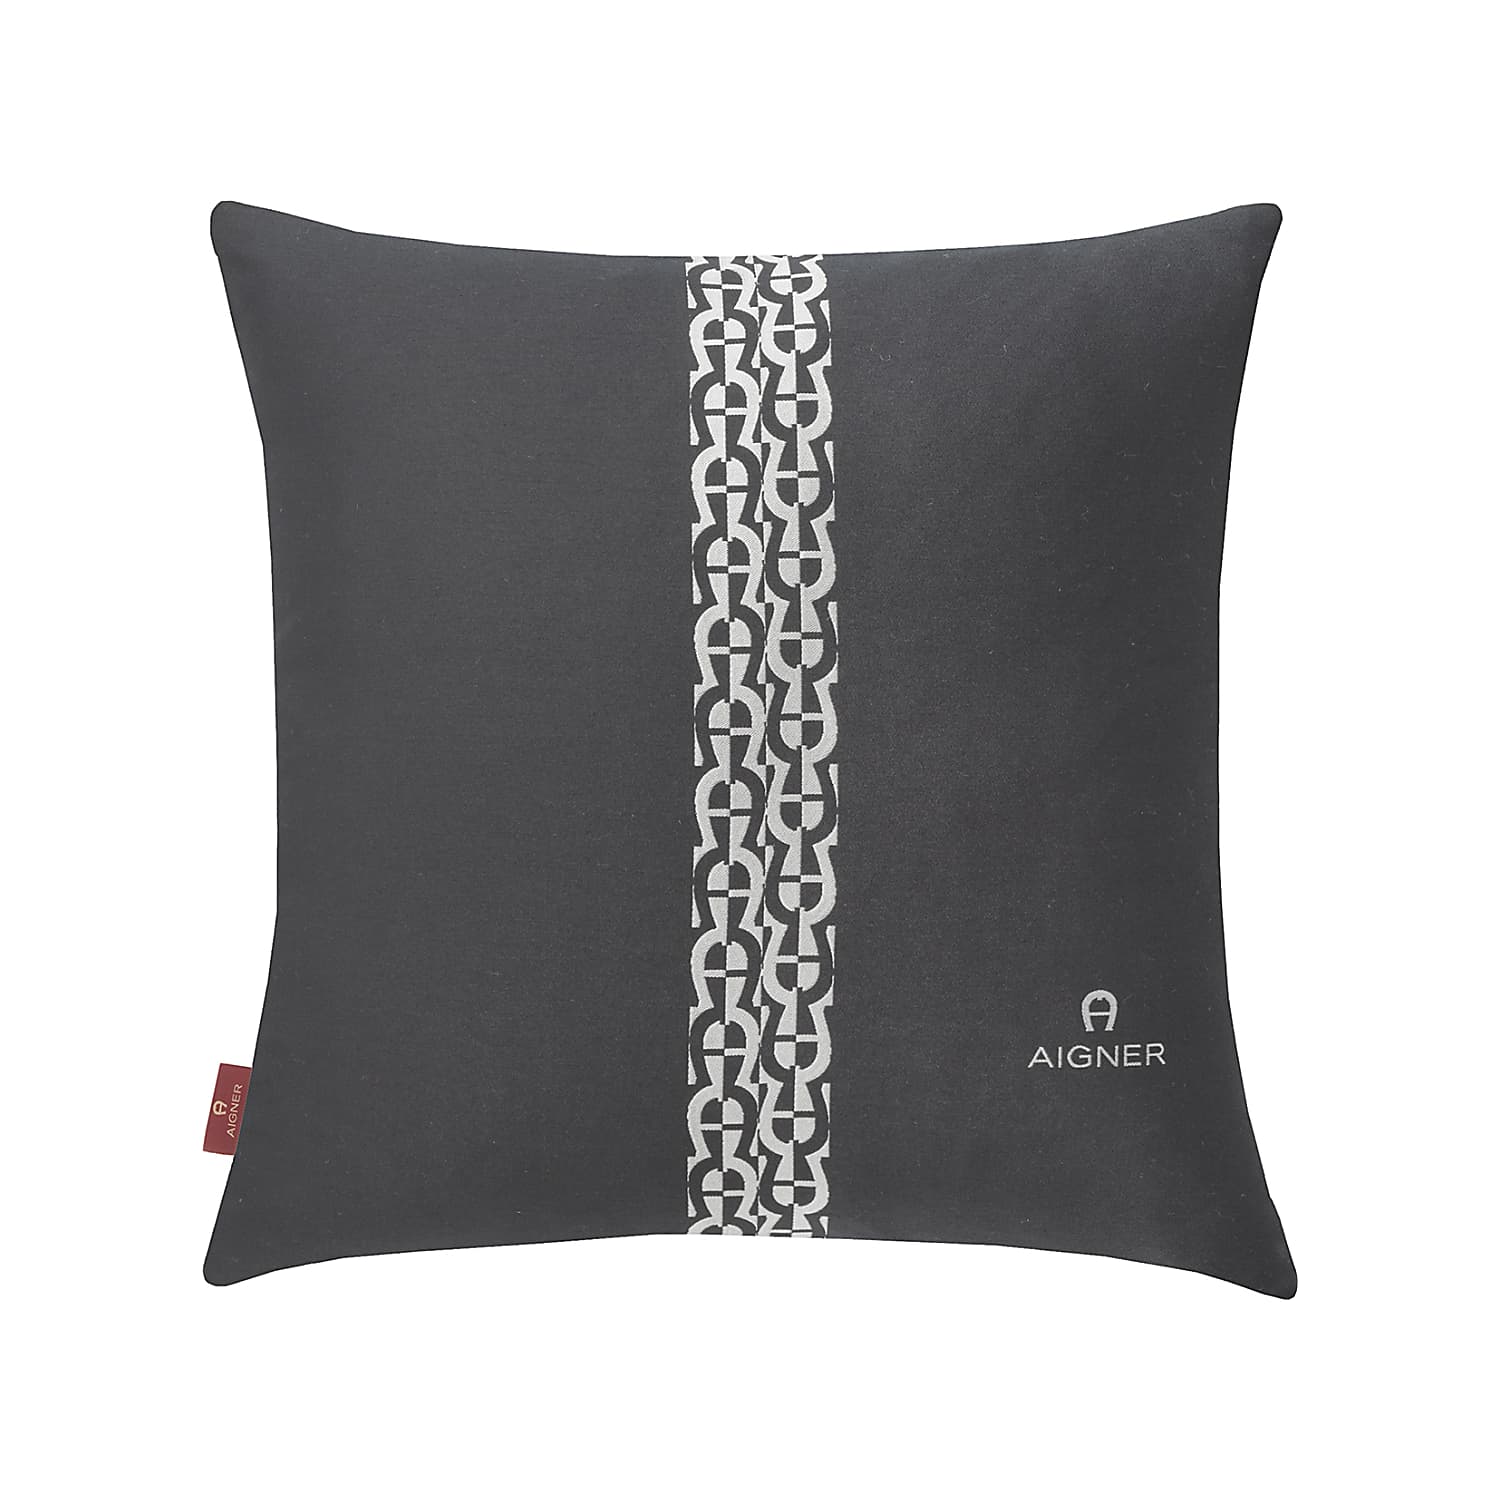 Pillowcase ALEA 48 x 48 cm